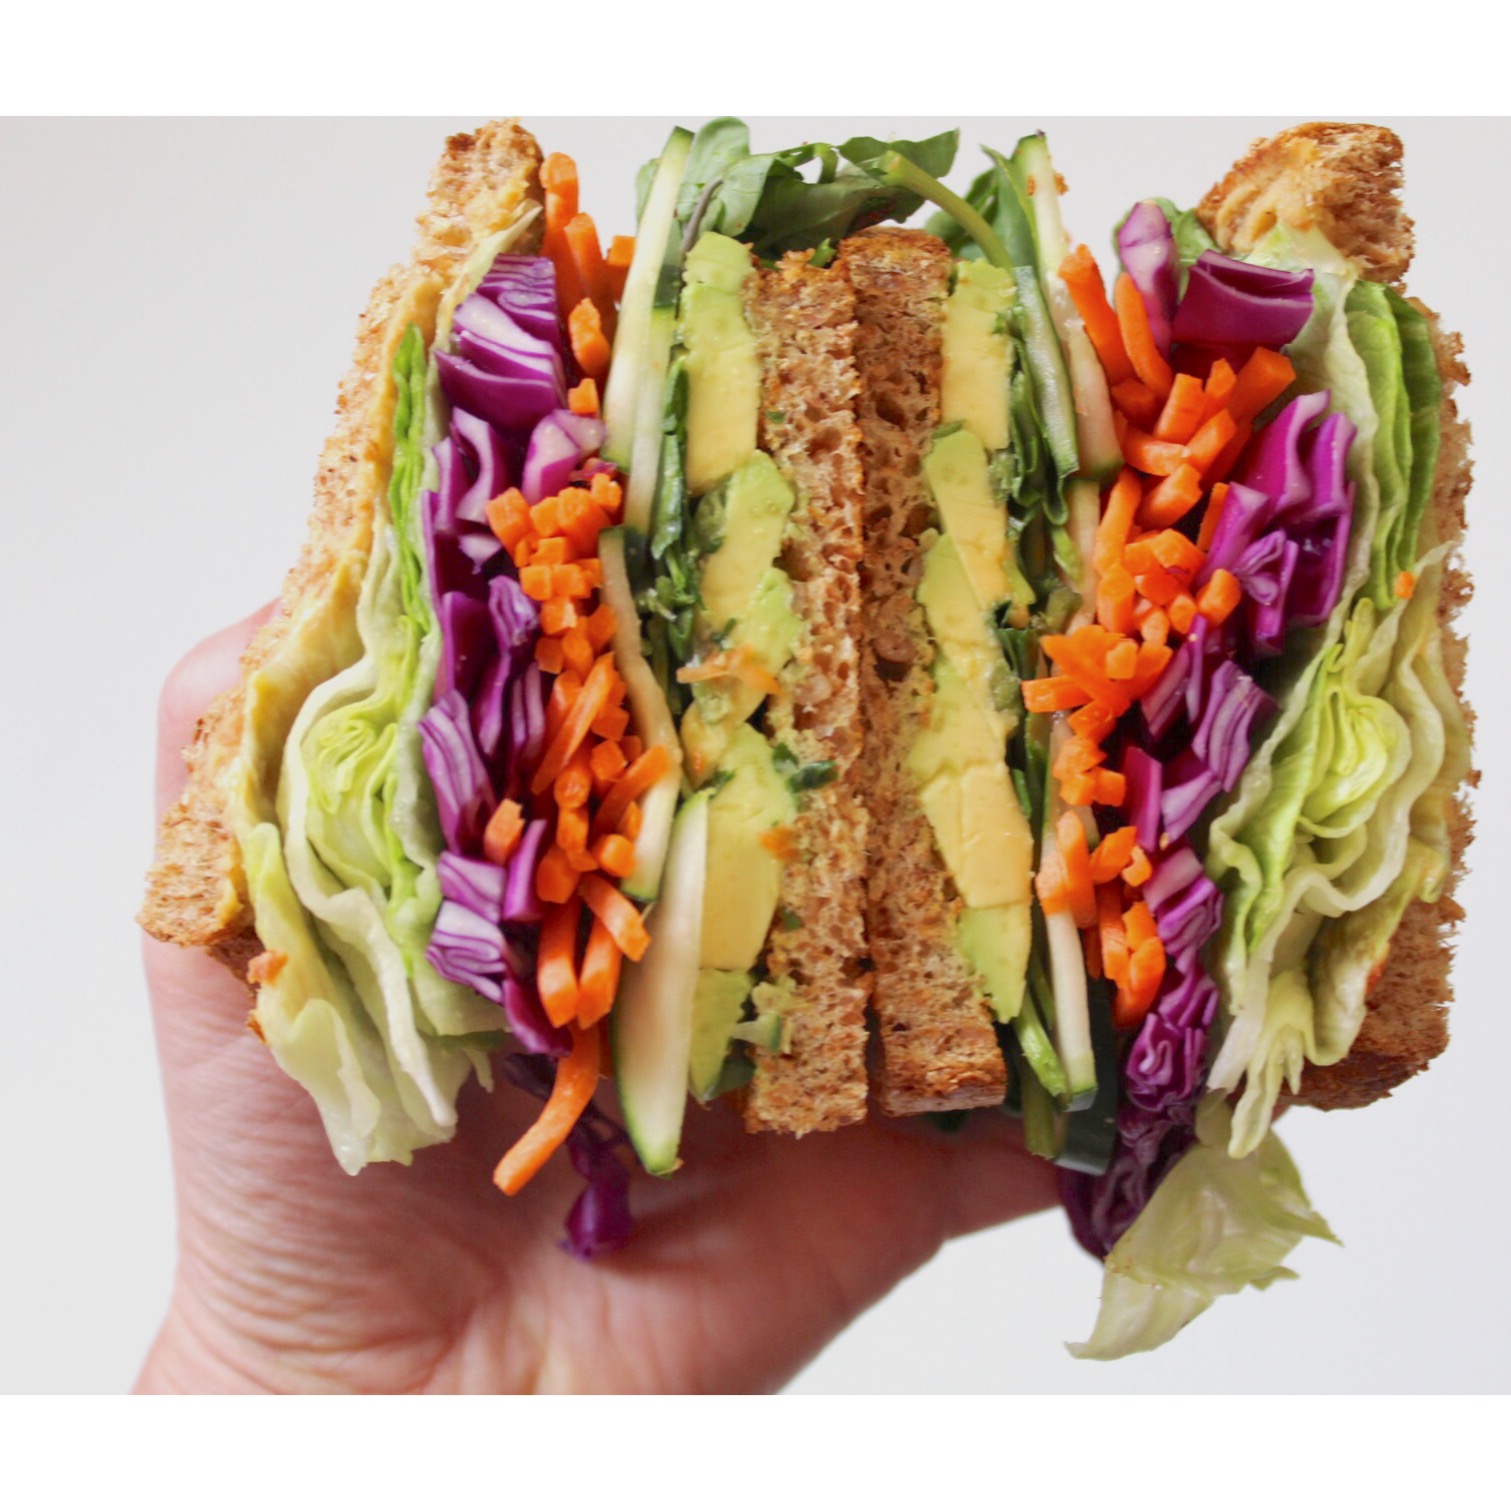 3 Ideas to Make Over Your Boring Lunch (Bonus: Hummus veggie sandwich)